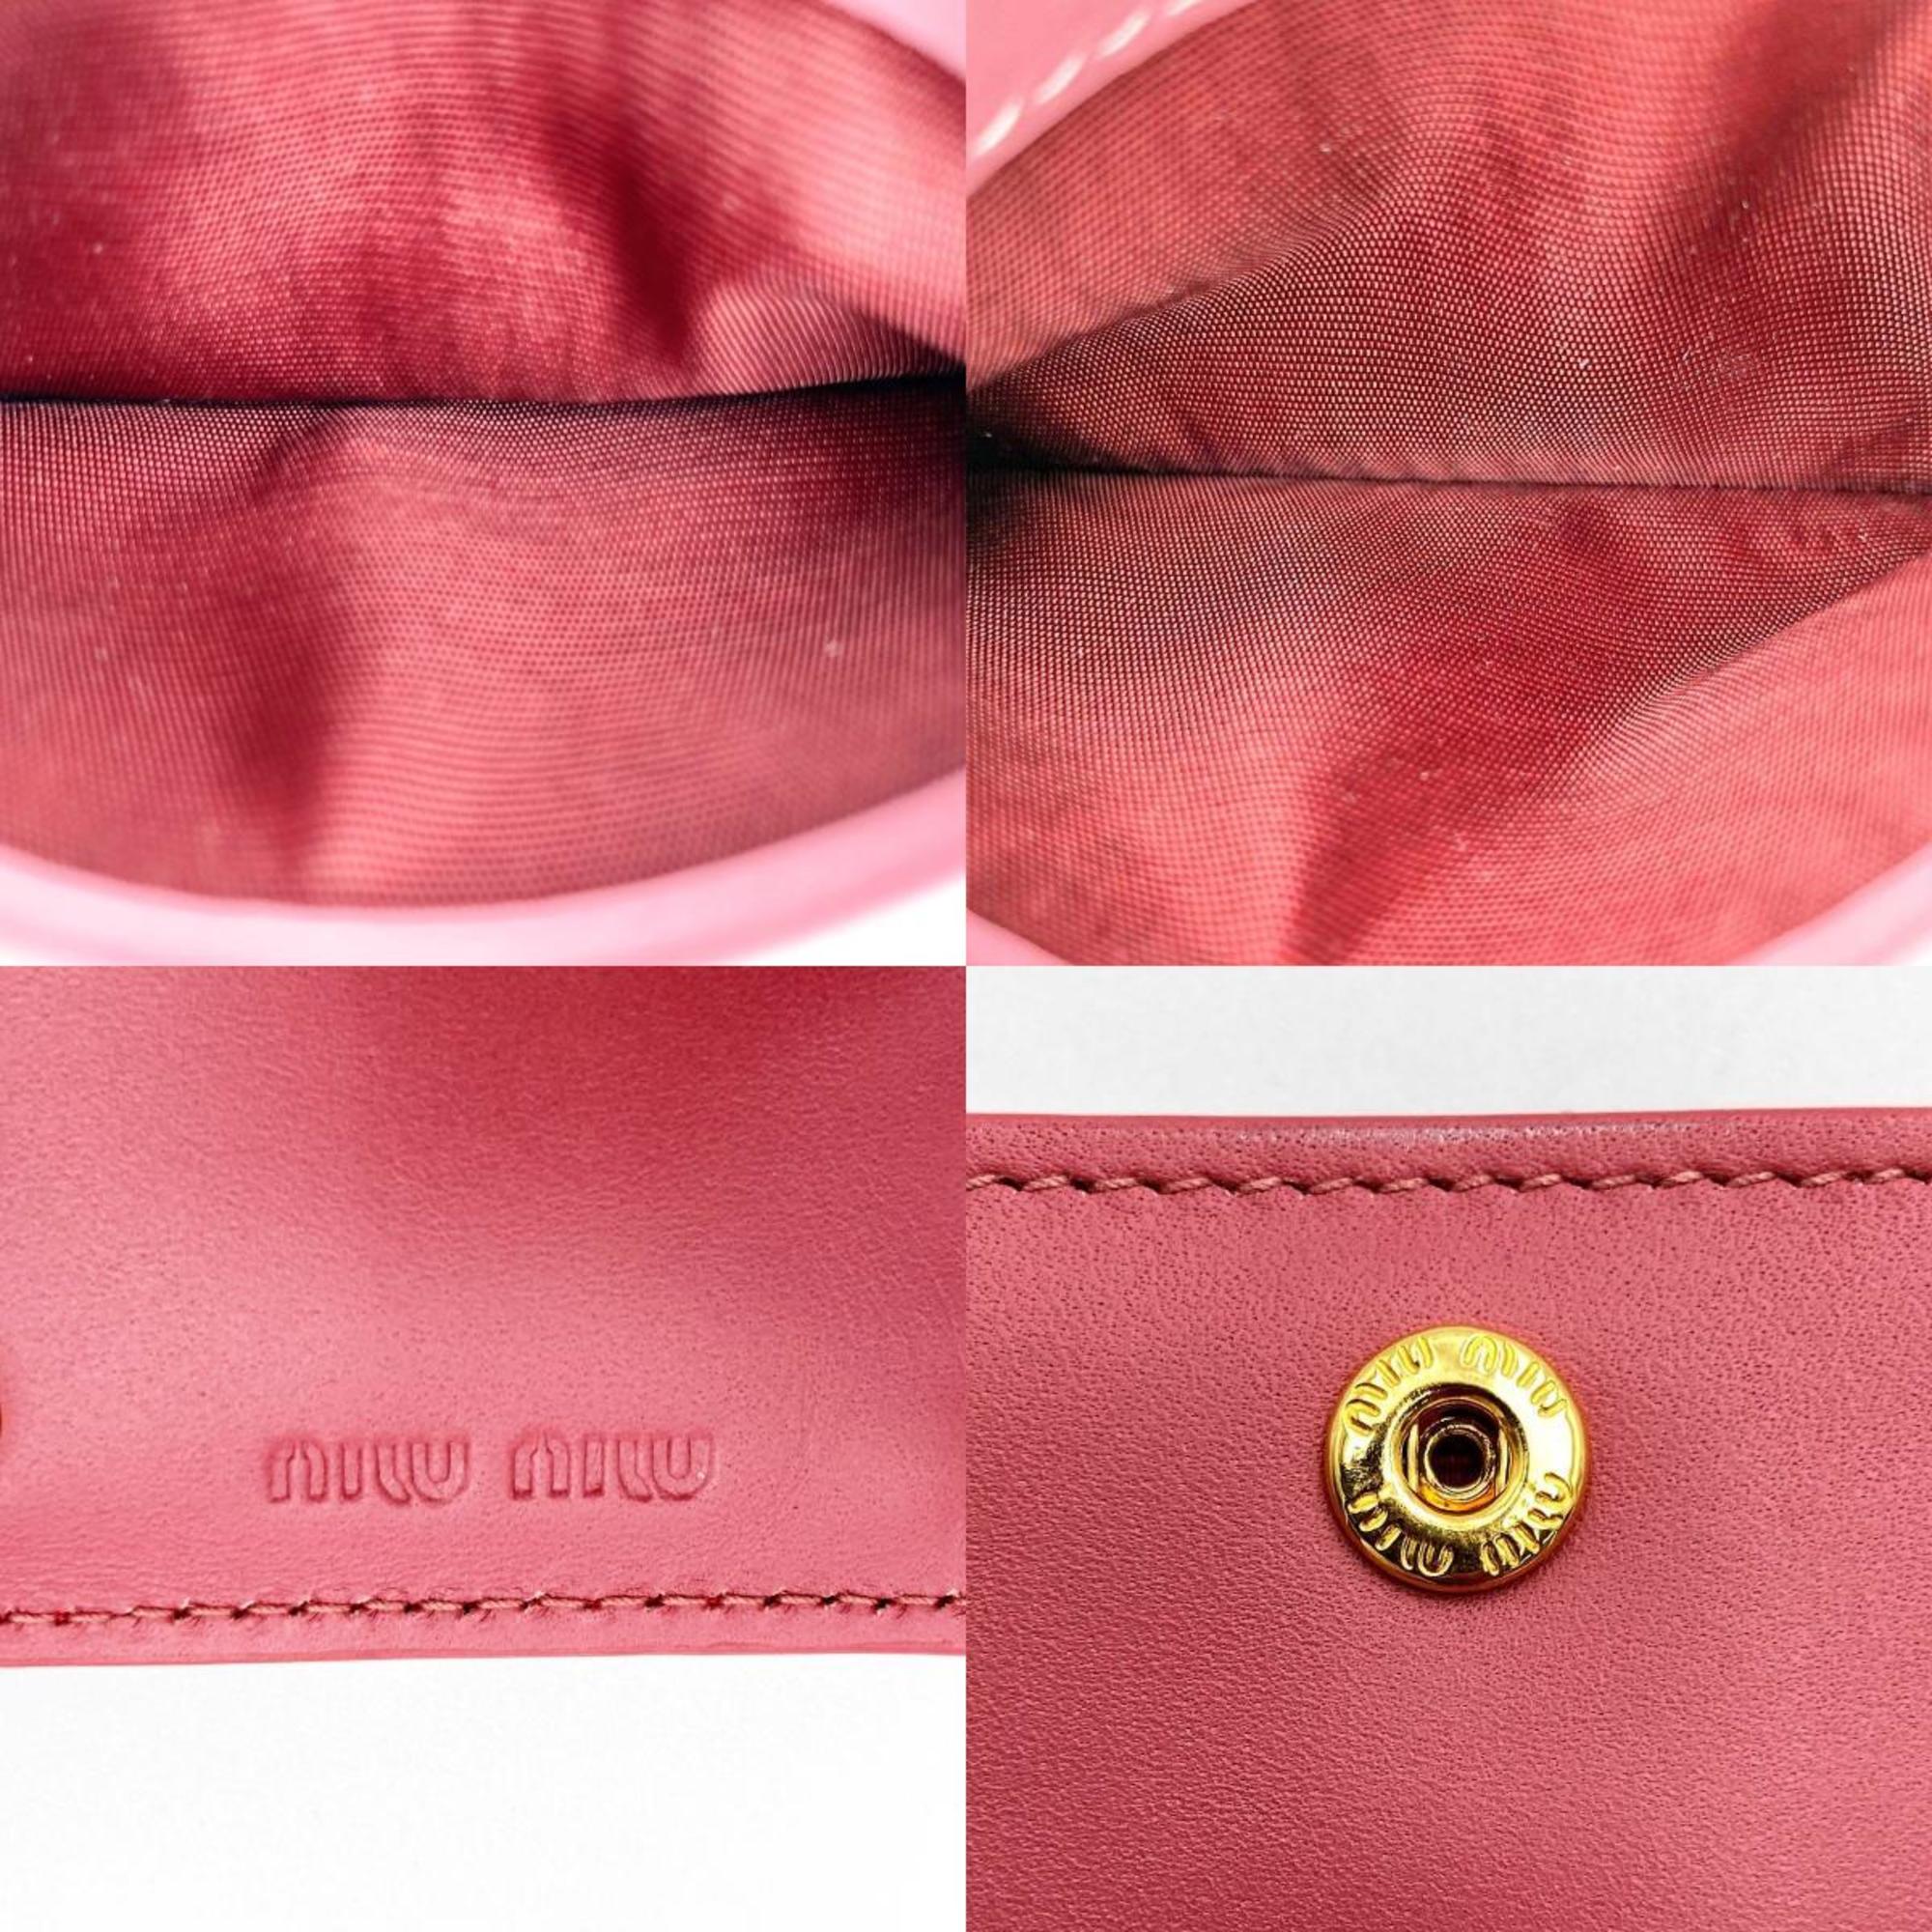 Miu Miu Miu Coin Case Wallet Purse Mini Pink Leather Ladies